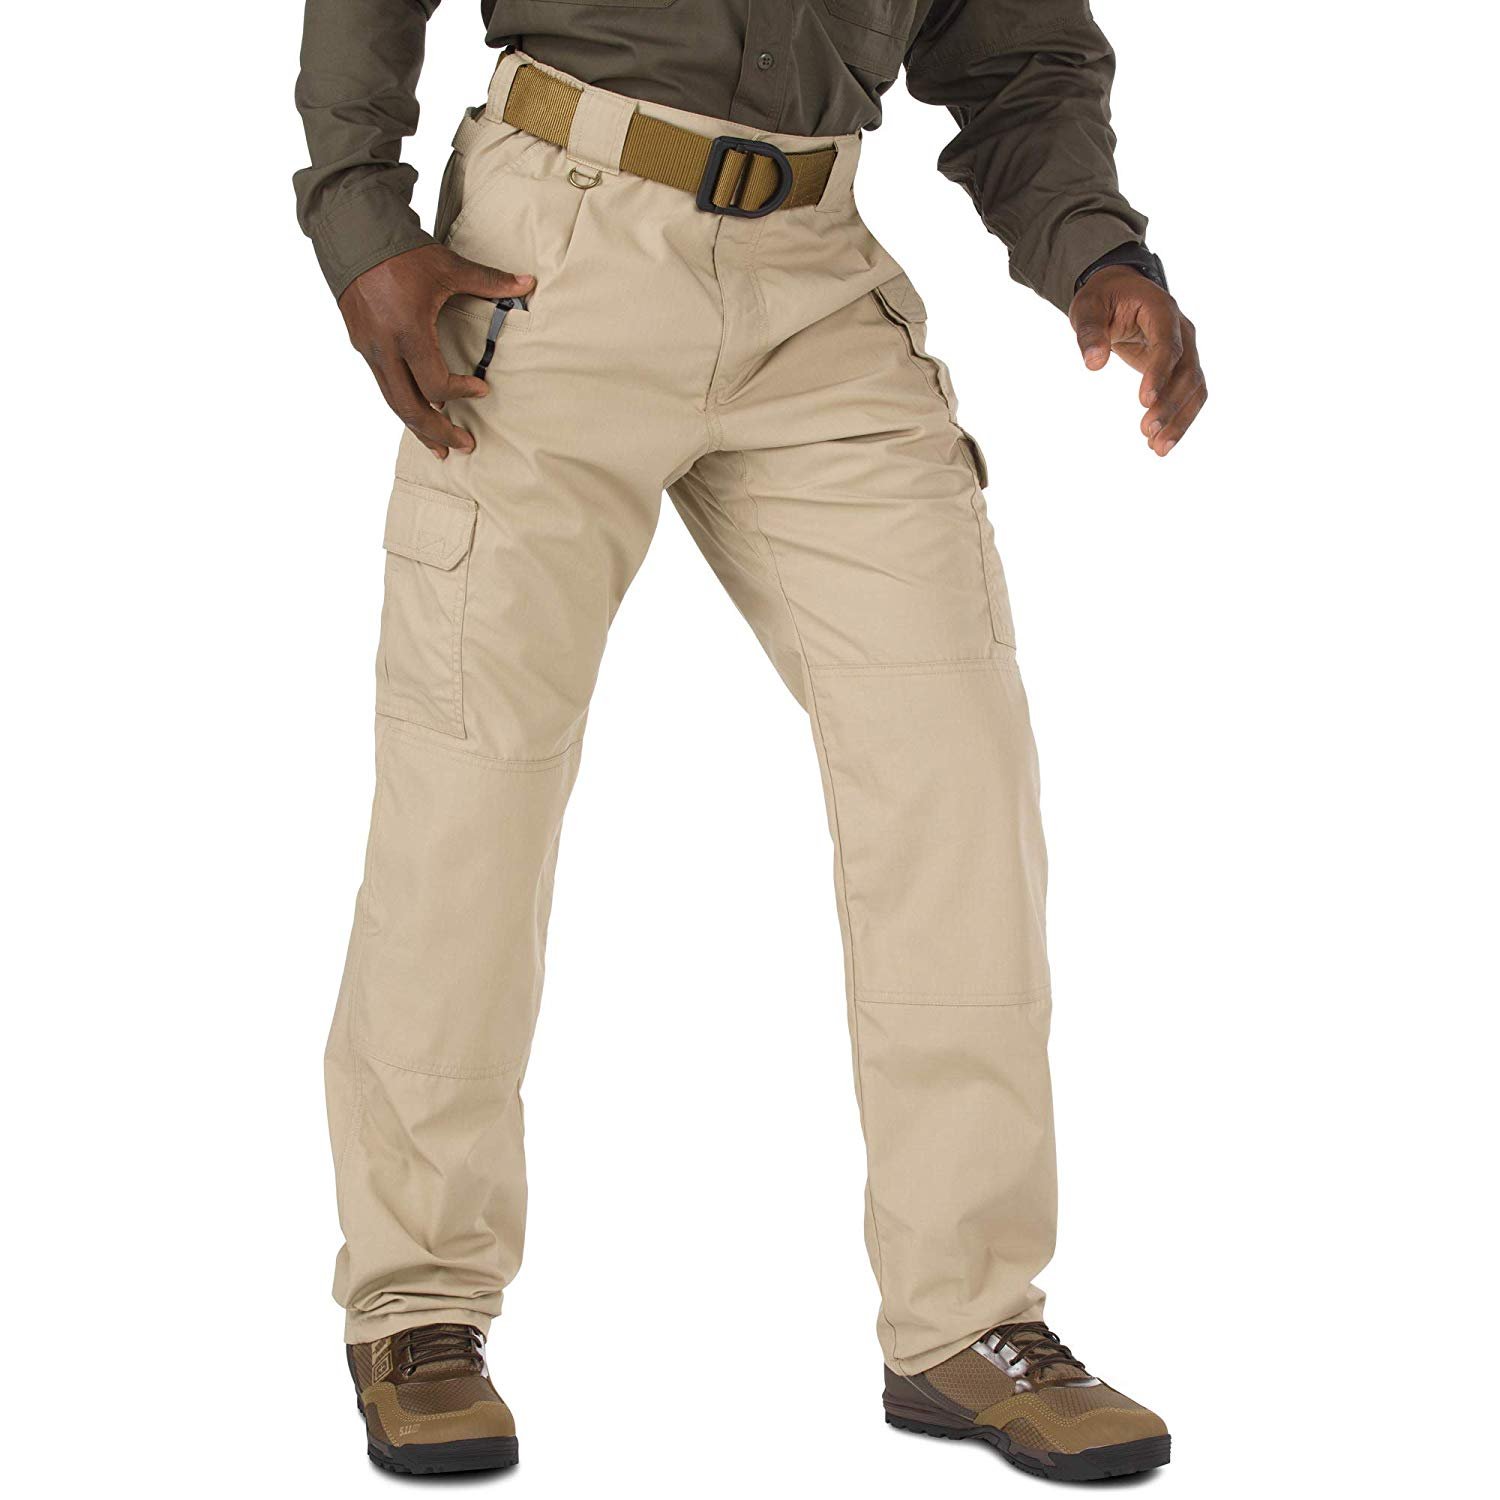 Style 74481 5.11 Tactical Men's Edge Chino Pants Waist 28-44 Inseam 30-36 